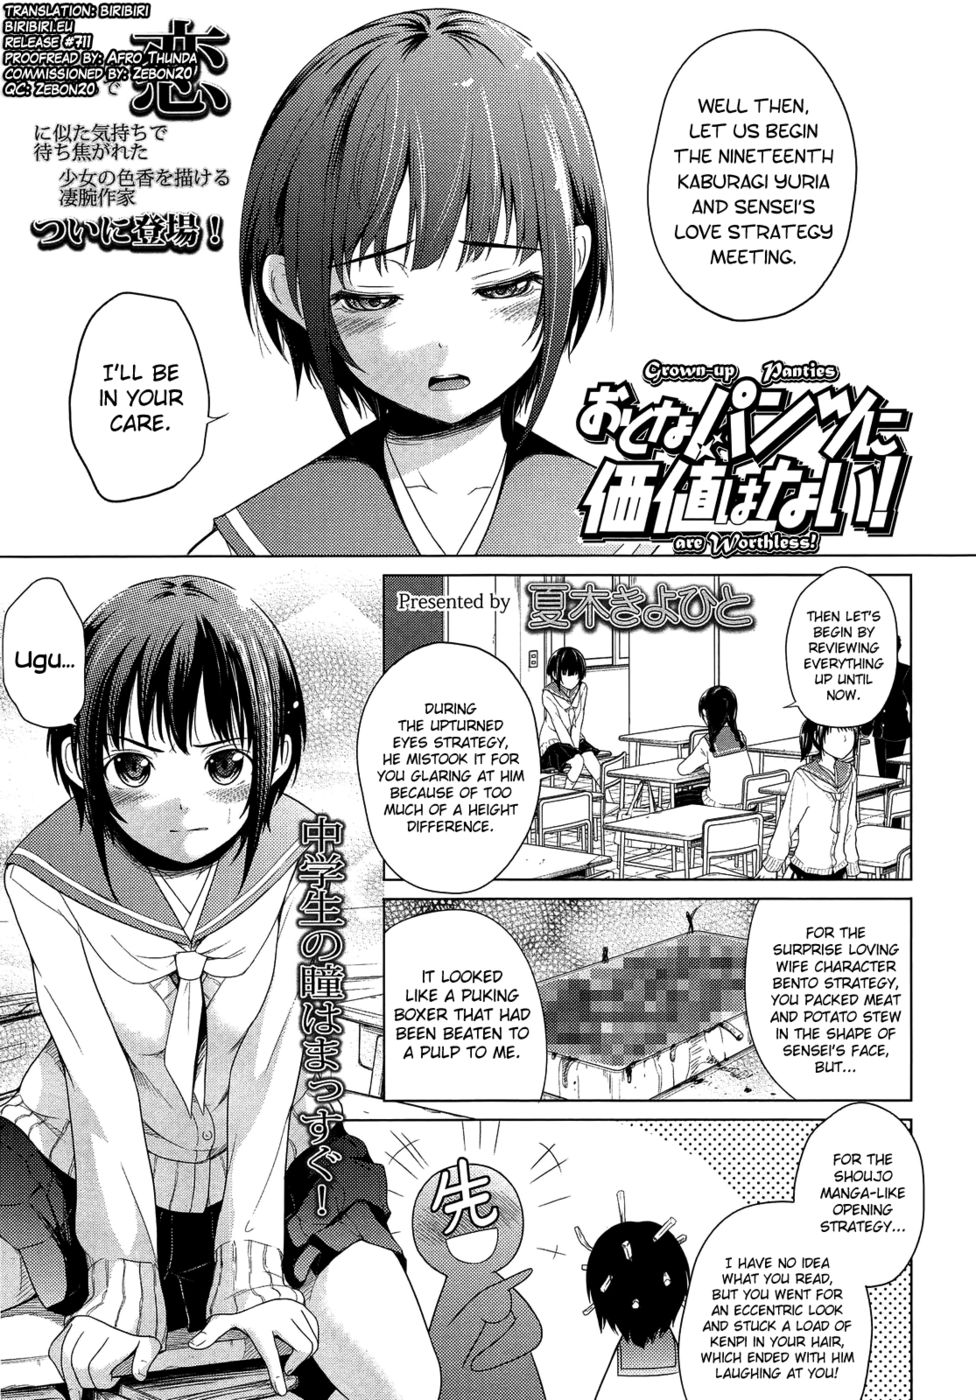 Hentai Manga Comic-Grown-up Panties Are Worthless !-Read-1